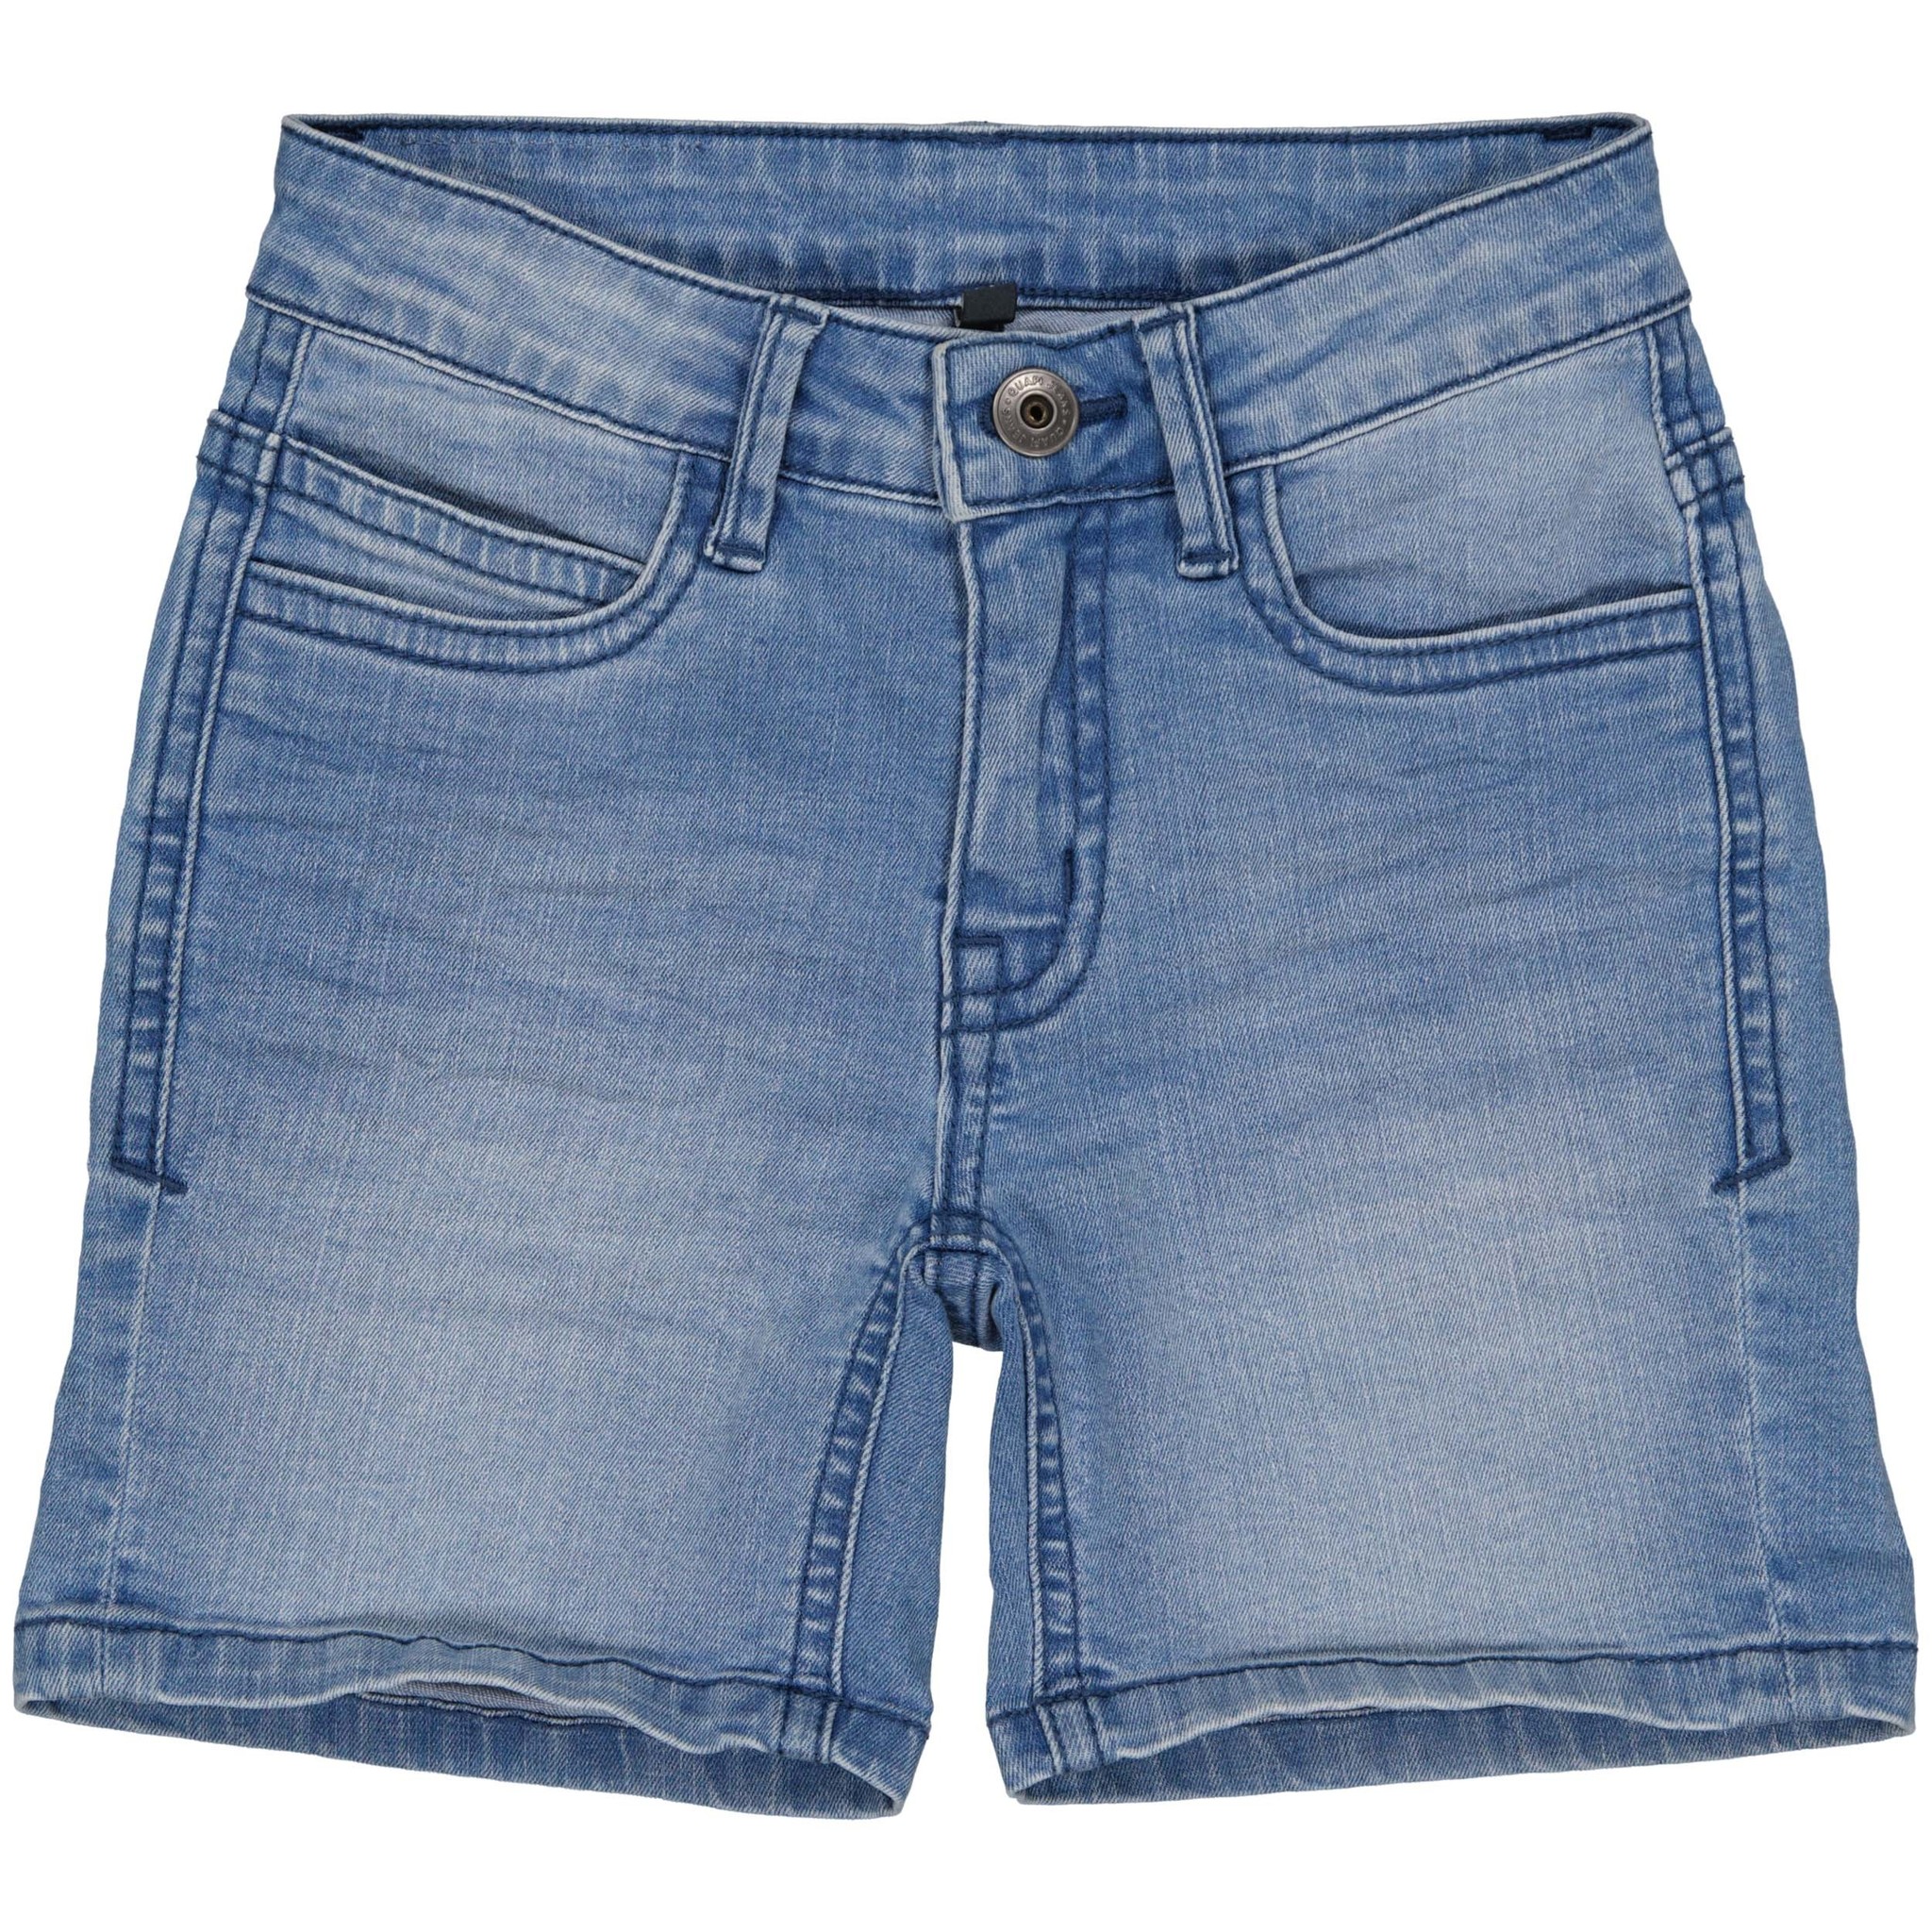 Quapi Jongens jeans short - Ti - Licht blauw